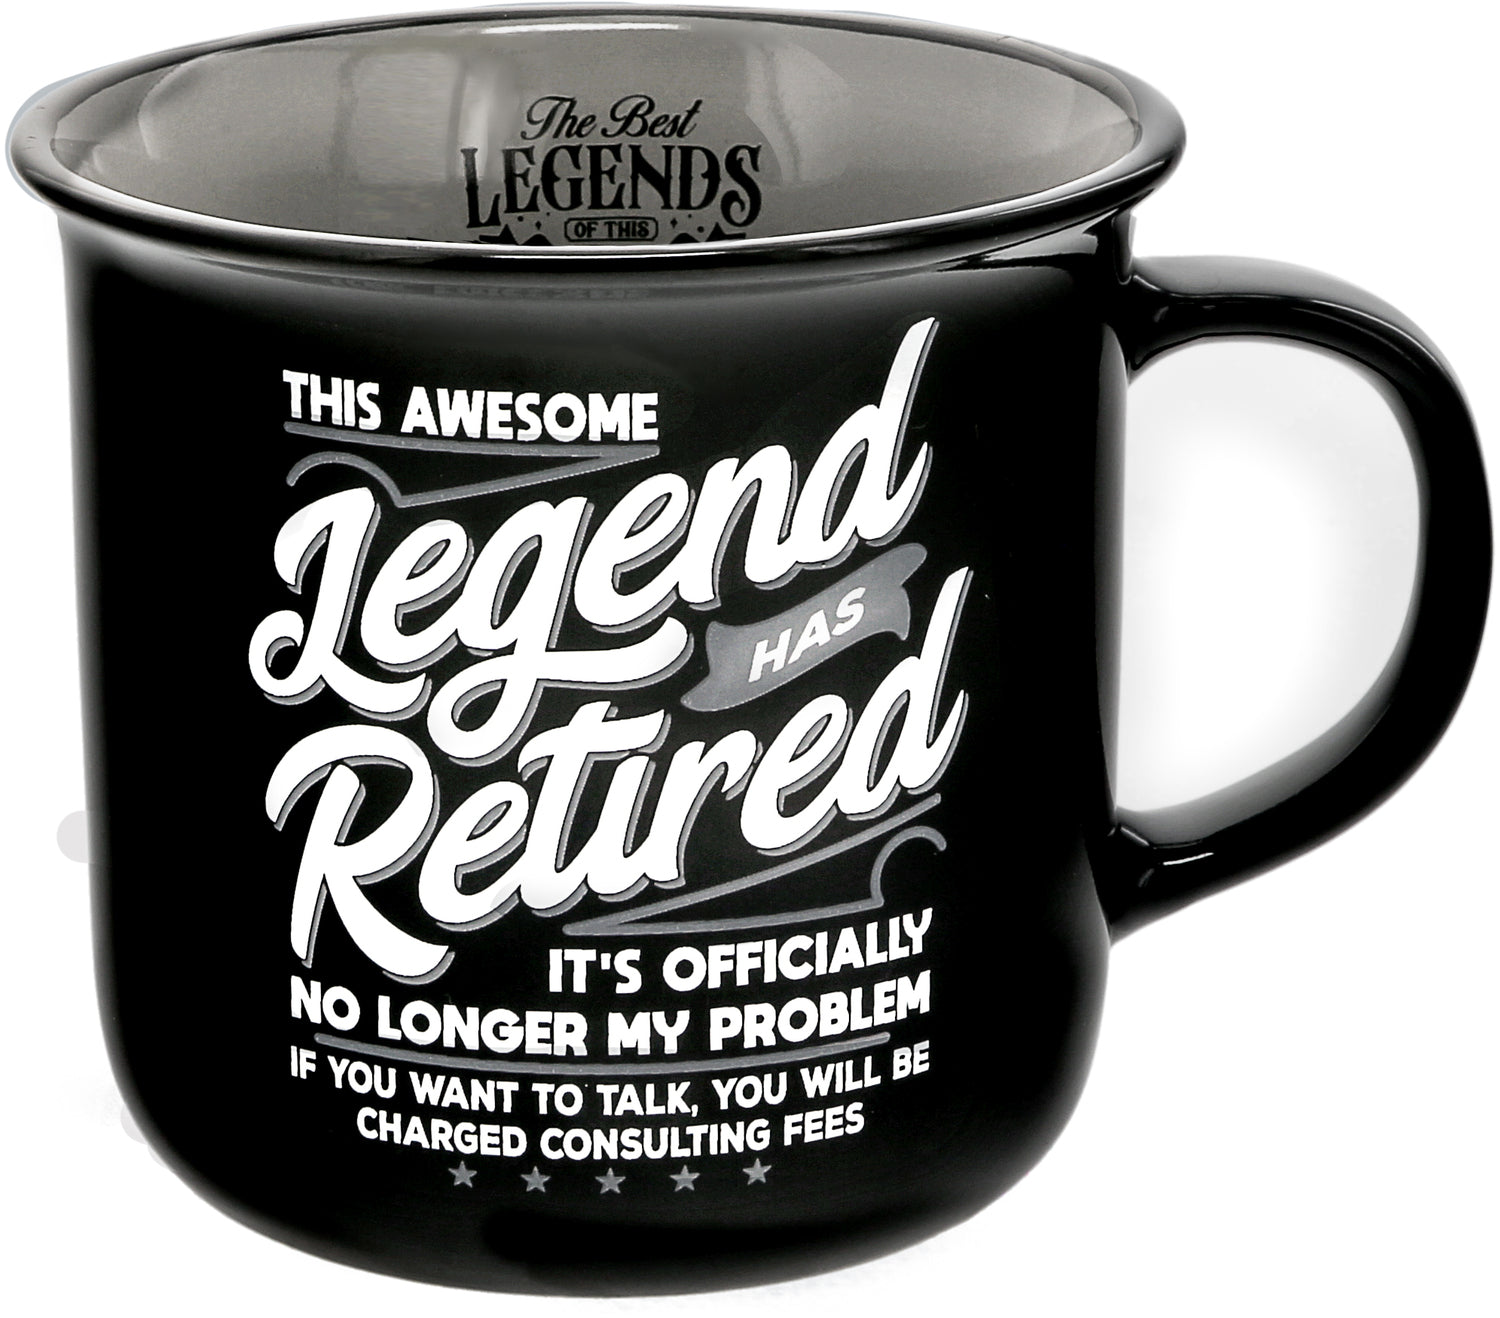 Legend Has Retired Mug